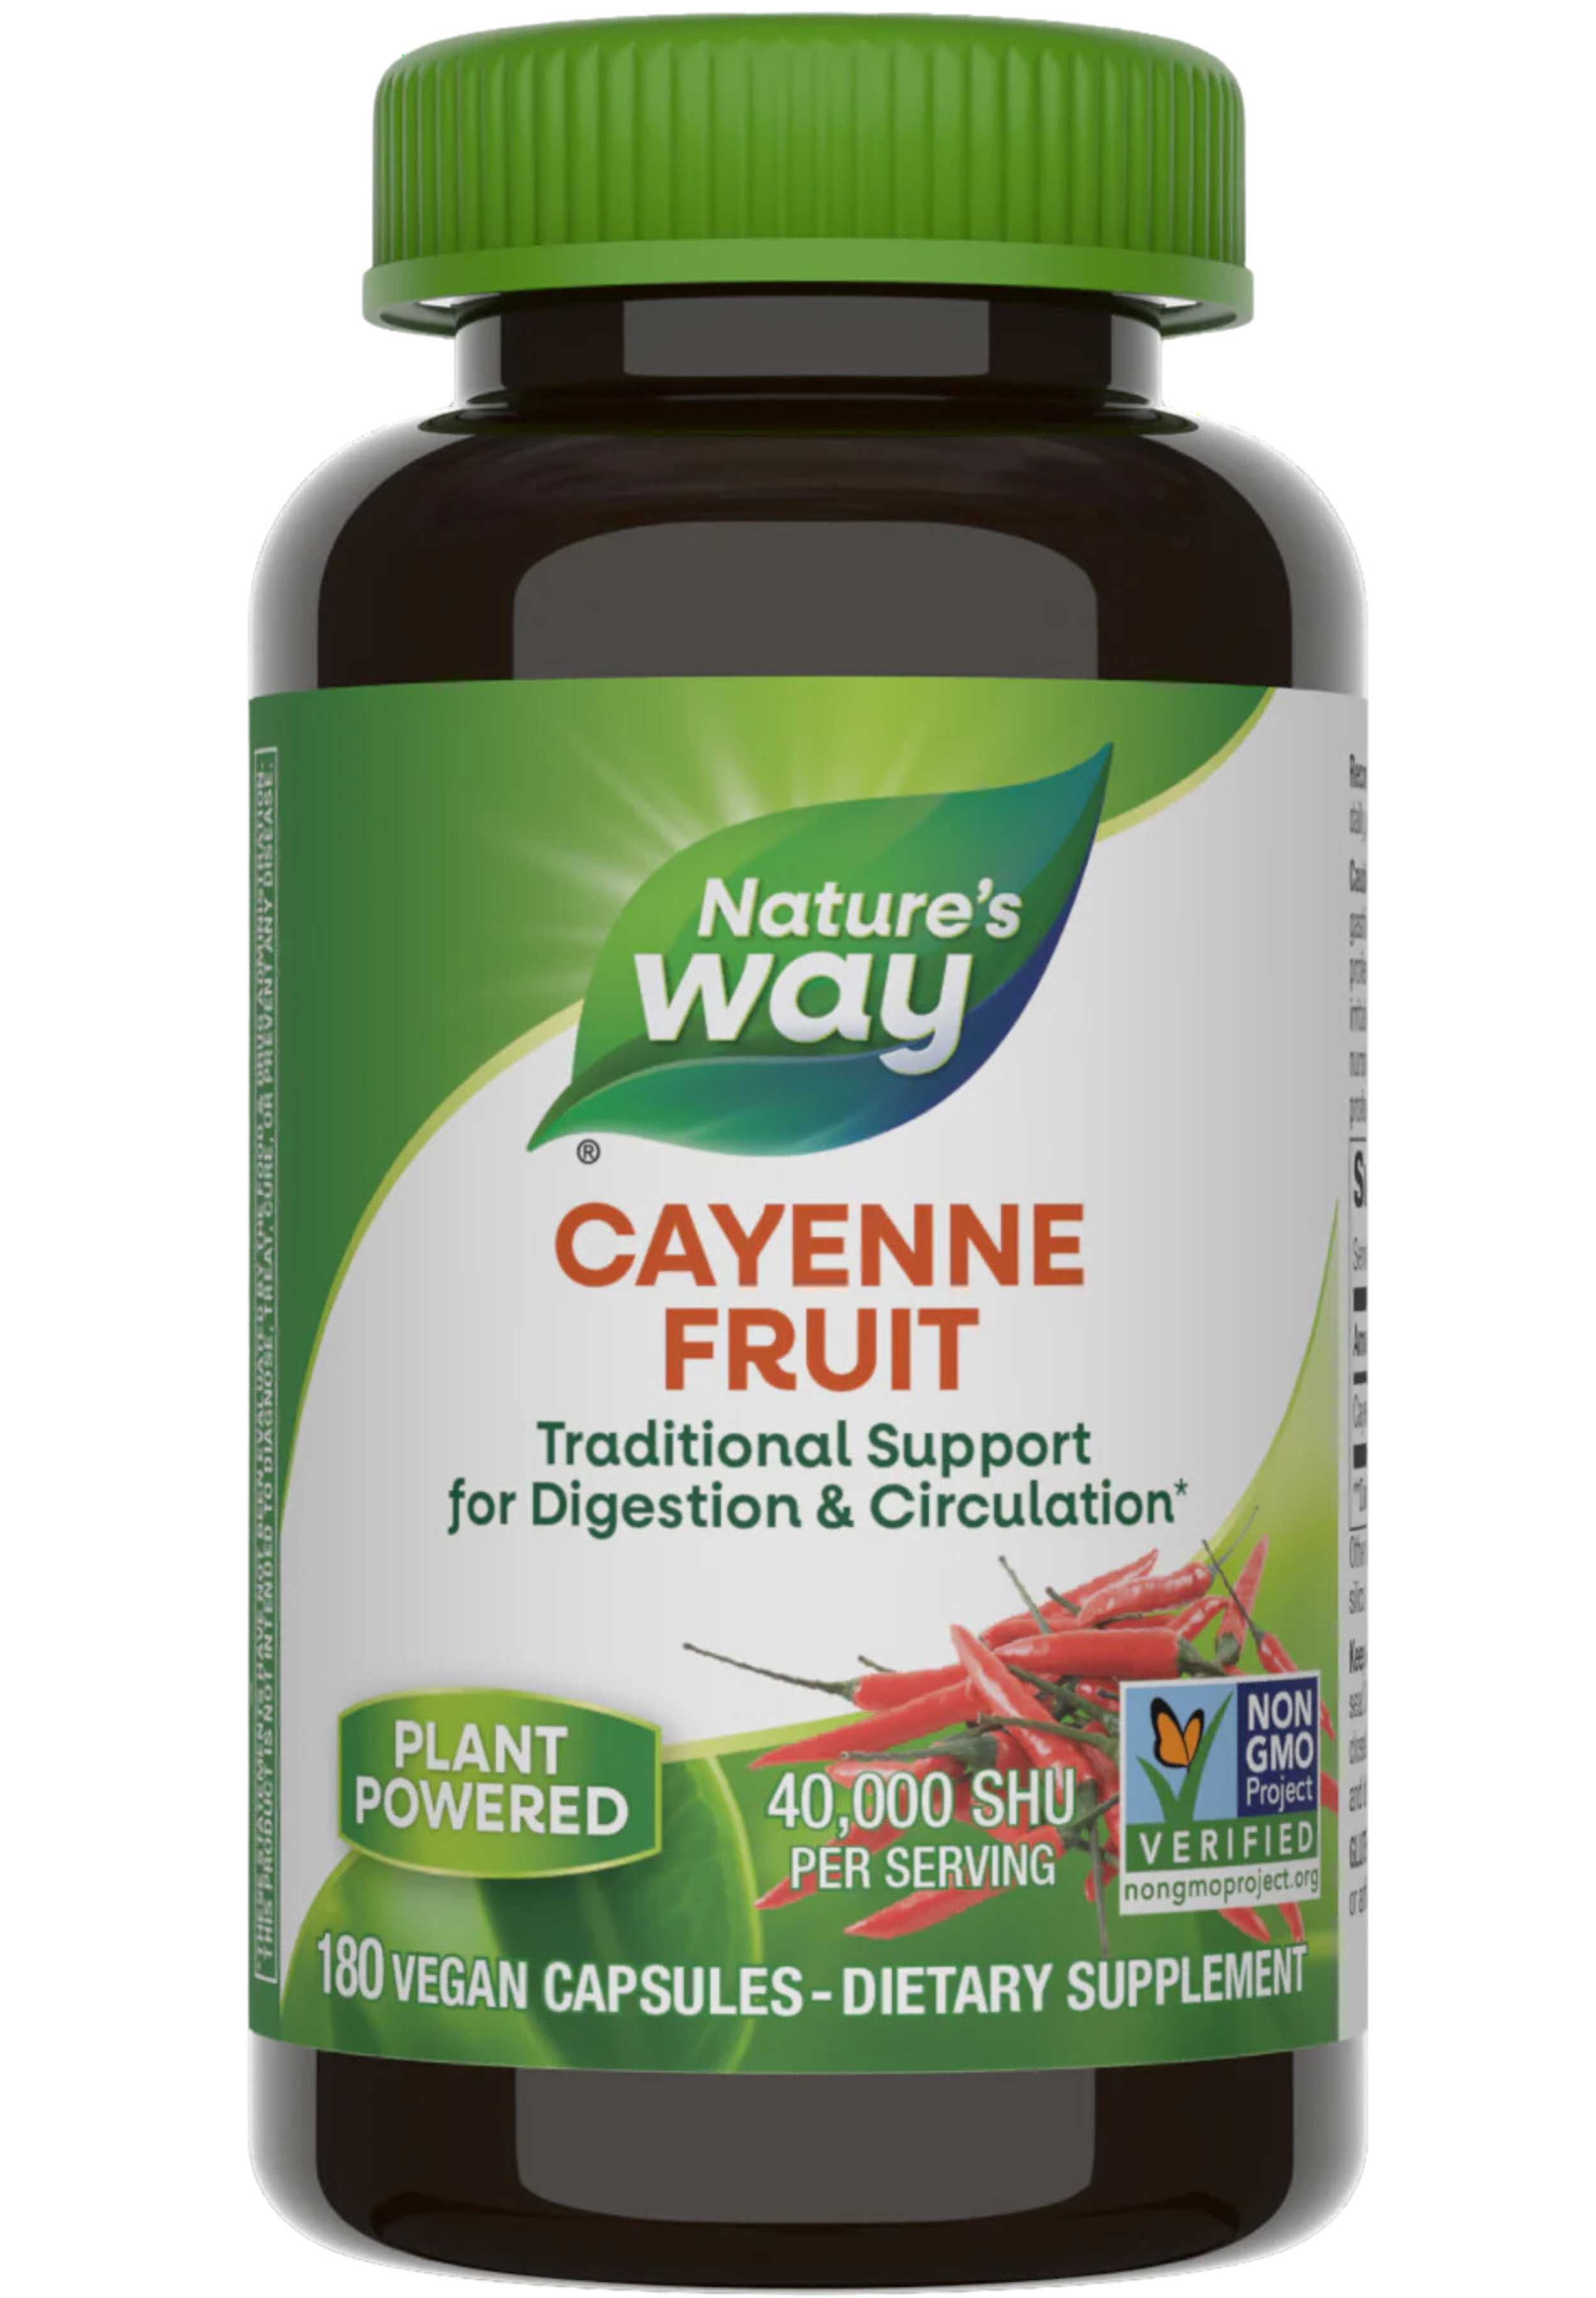 Nature's Way Cayenne Fruit